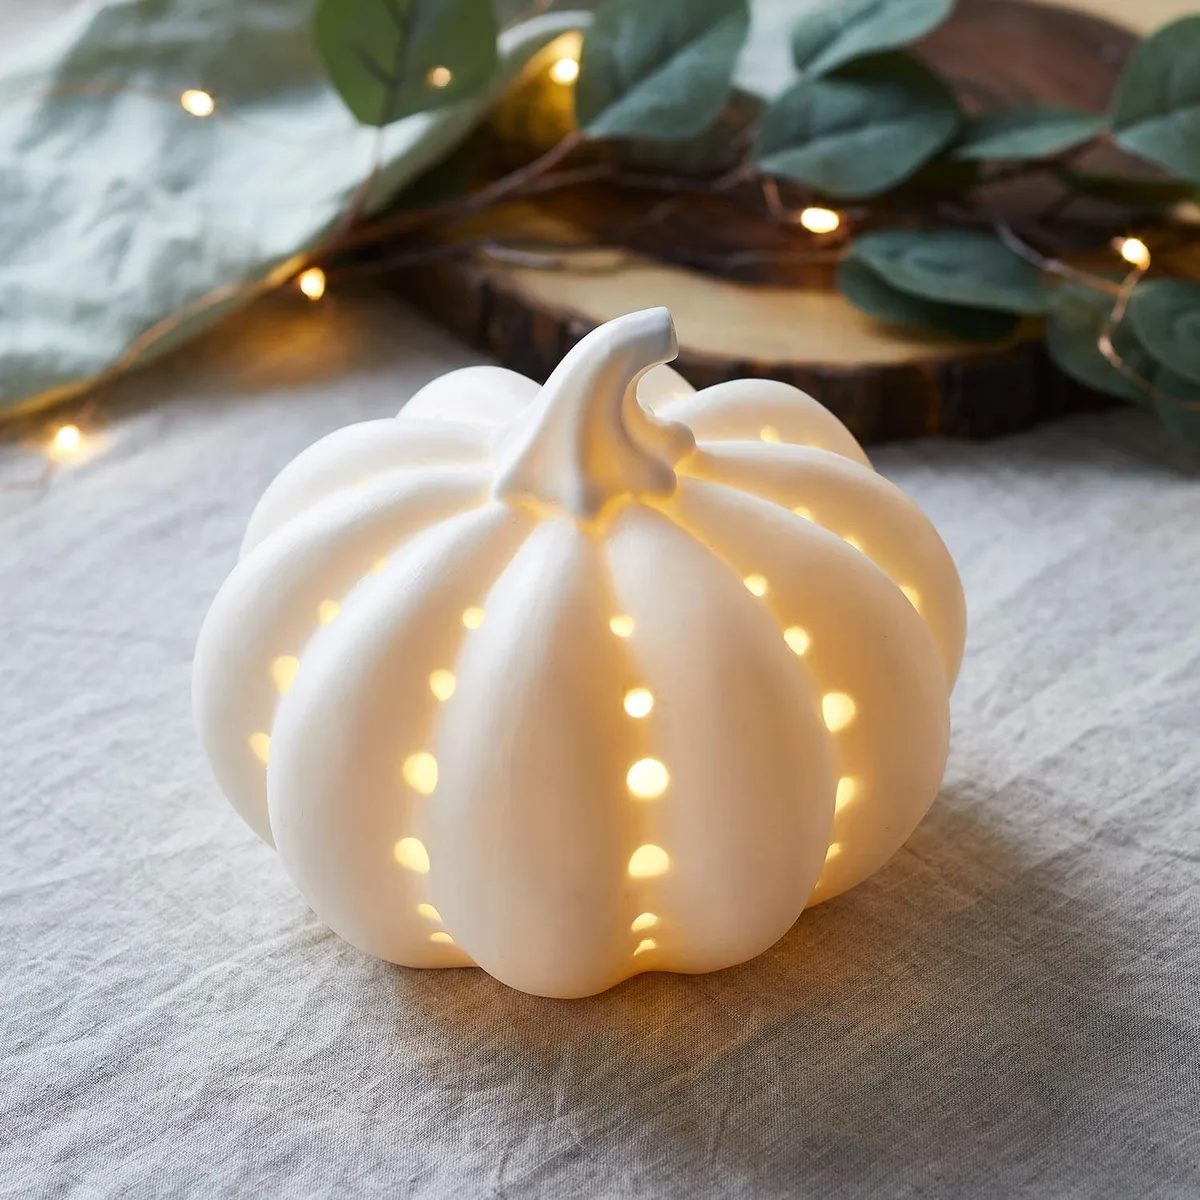 Easy pumpkin painting ideas ceramic pumpkins with tealights